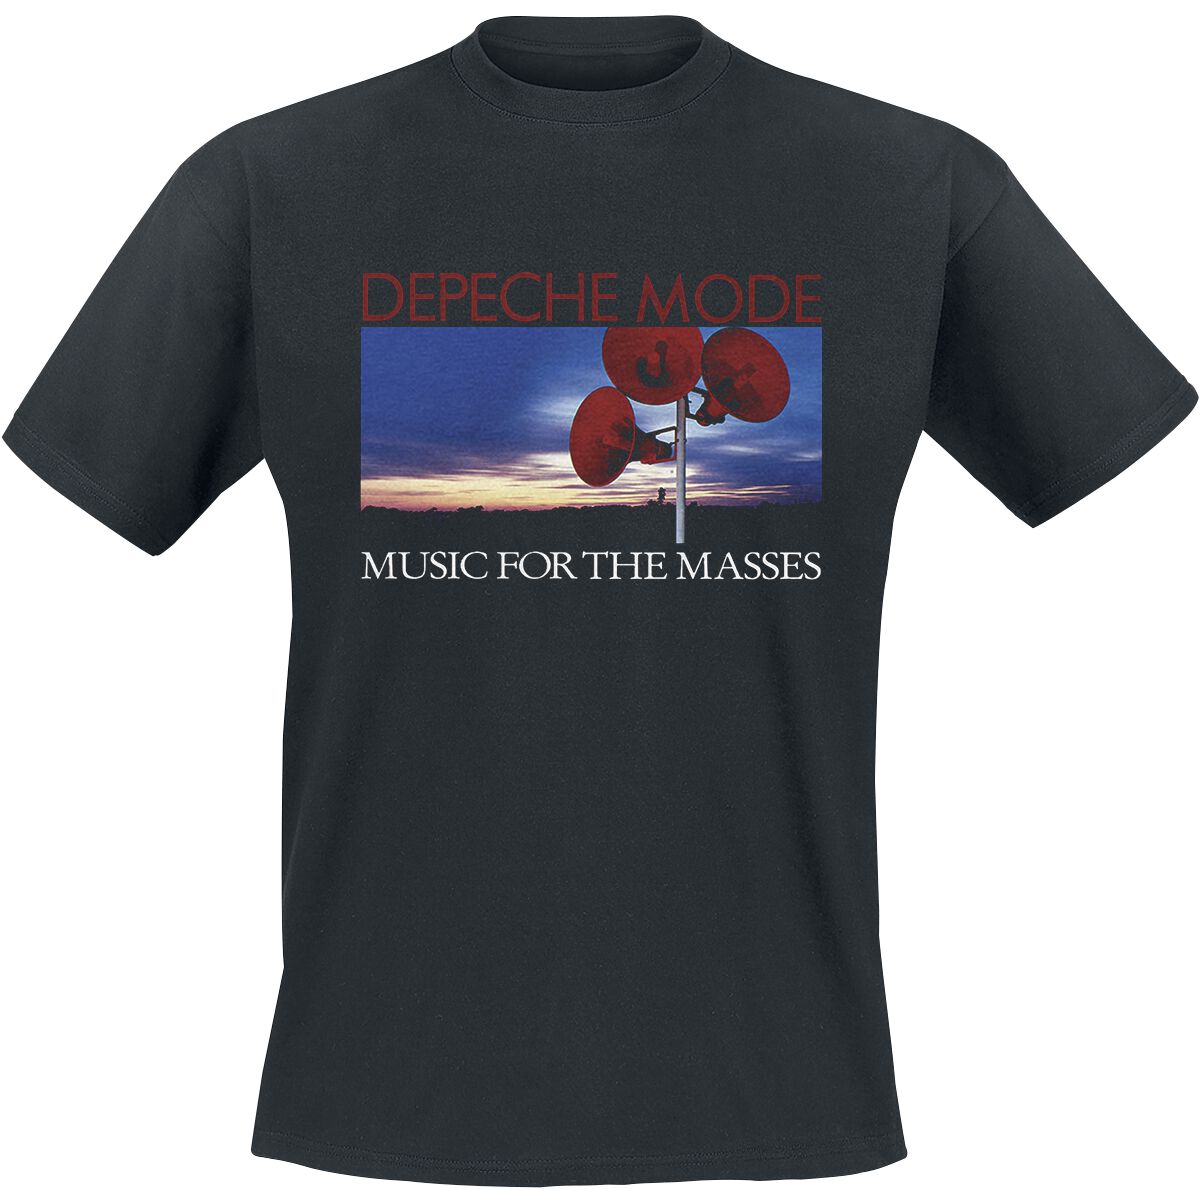 Depeche Mode T-Shirt - Music for the masses - S bis 4XL - für Männer - Größe XL - schwarz  - Lizenziertes Merchandise!